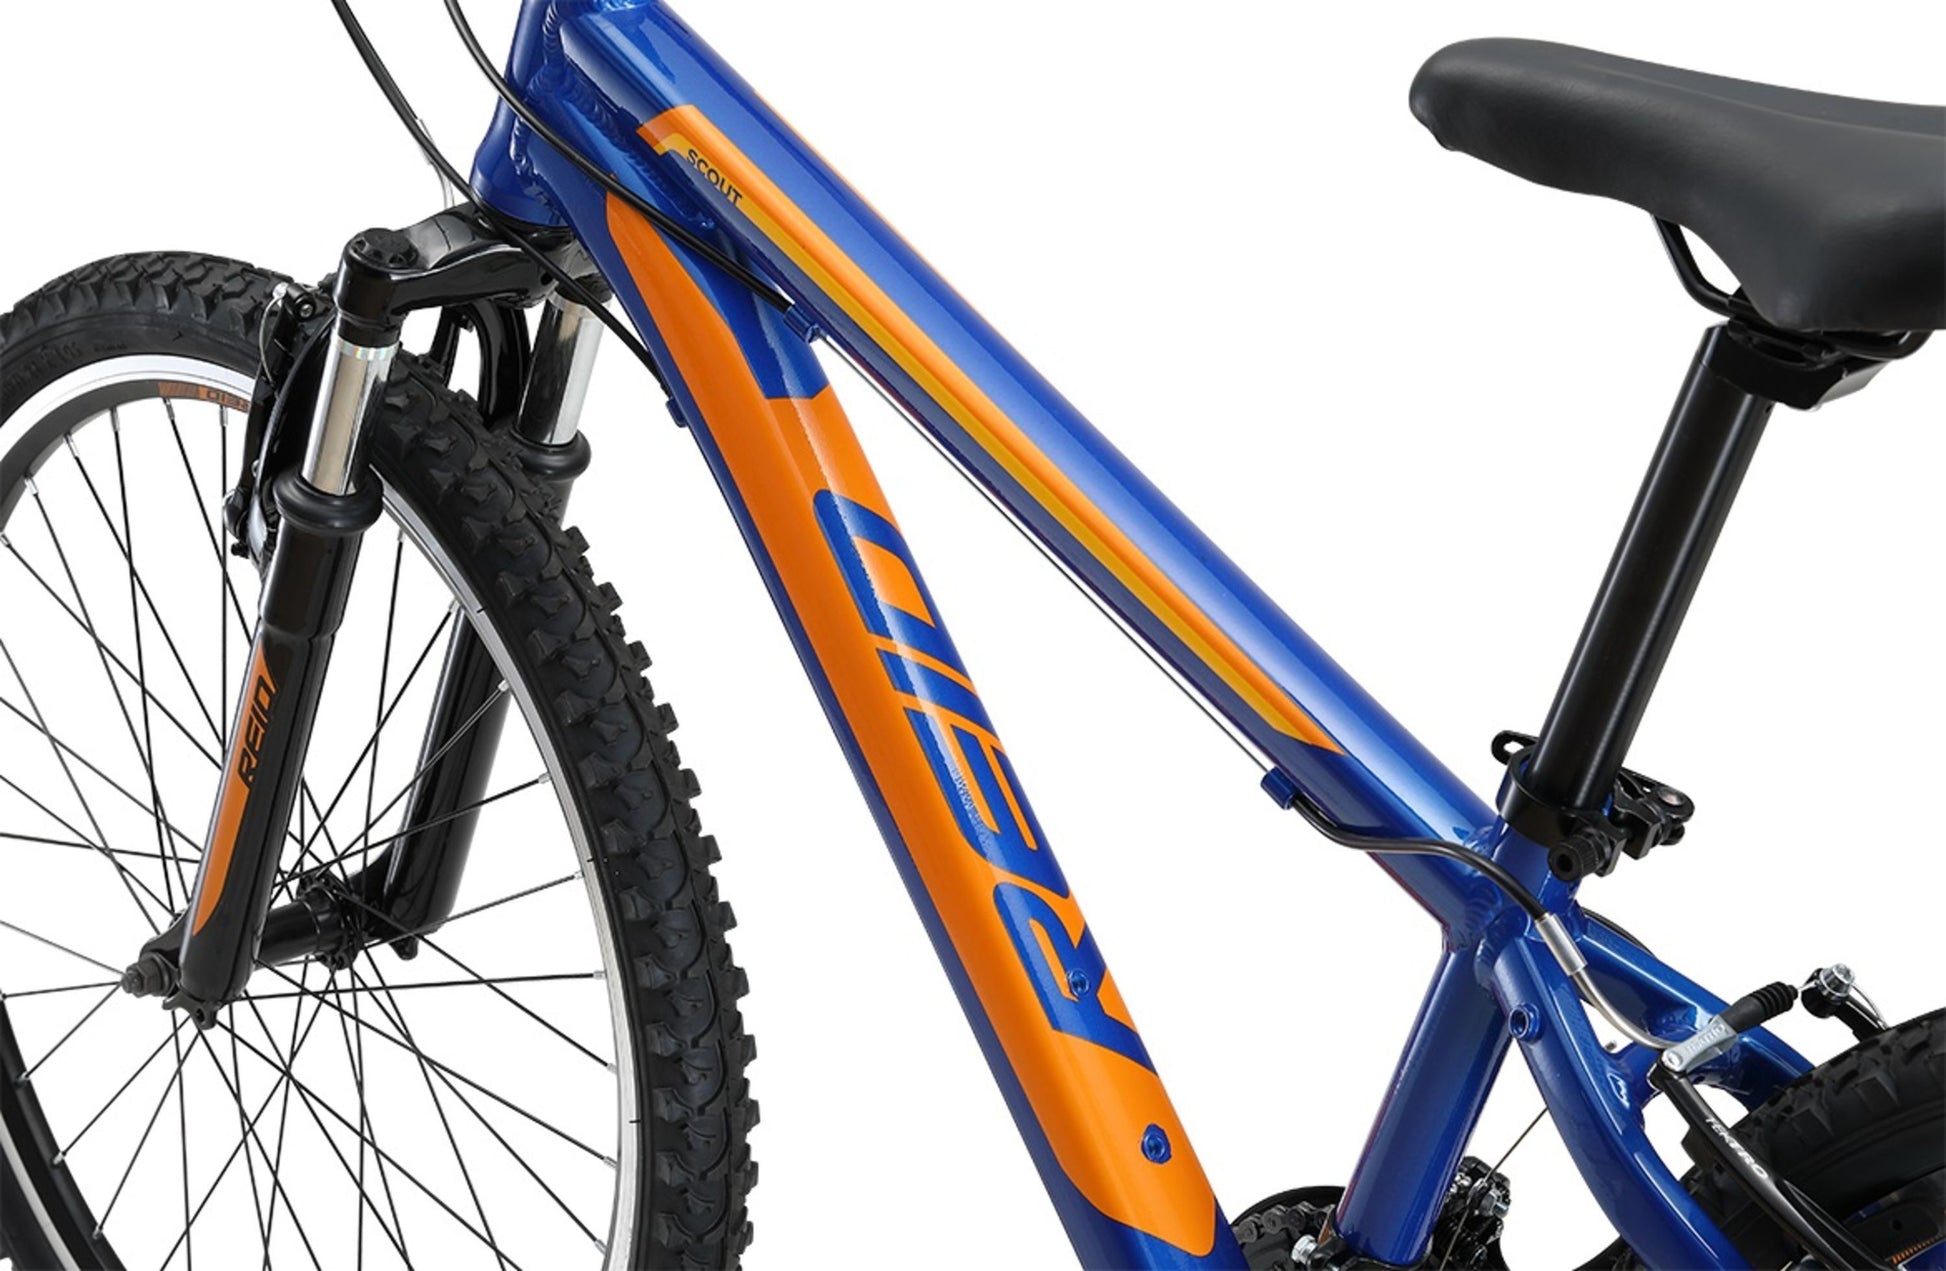 Scout 24" Kids Bike in Blue Orange showing MTB style bike frame from Reid Cycles Australia